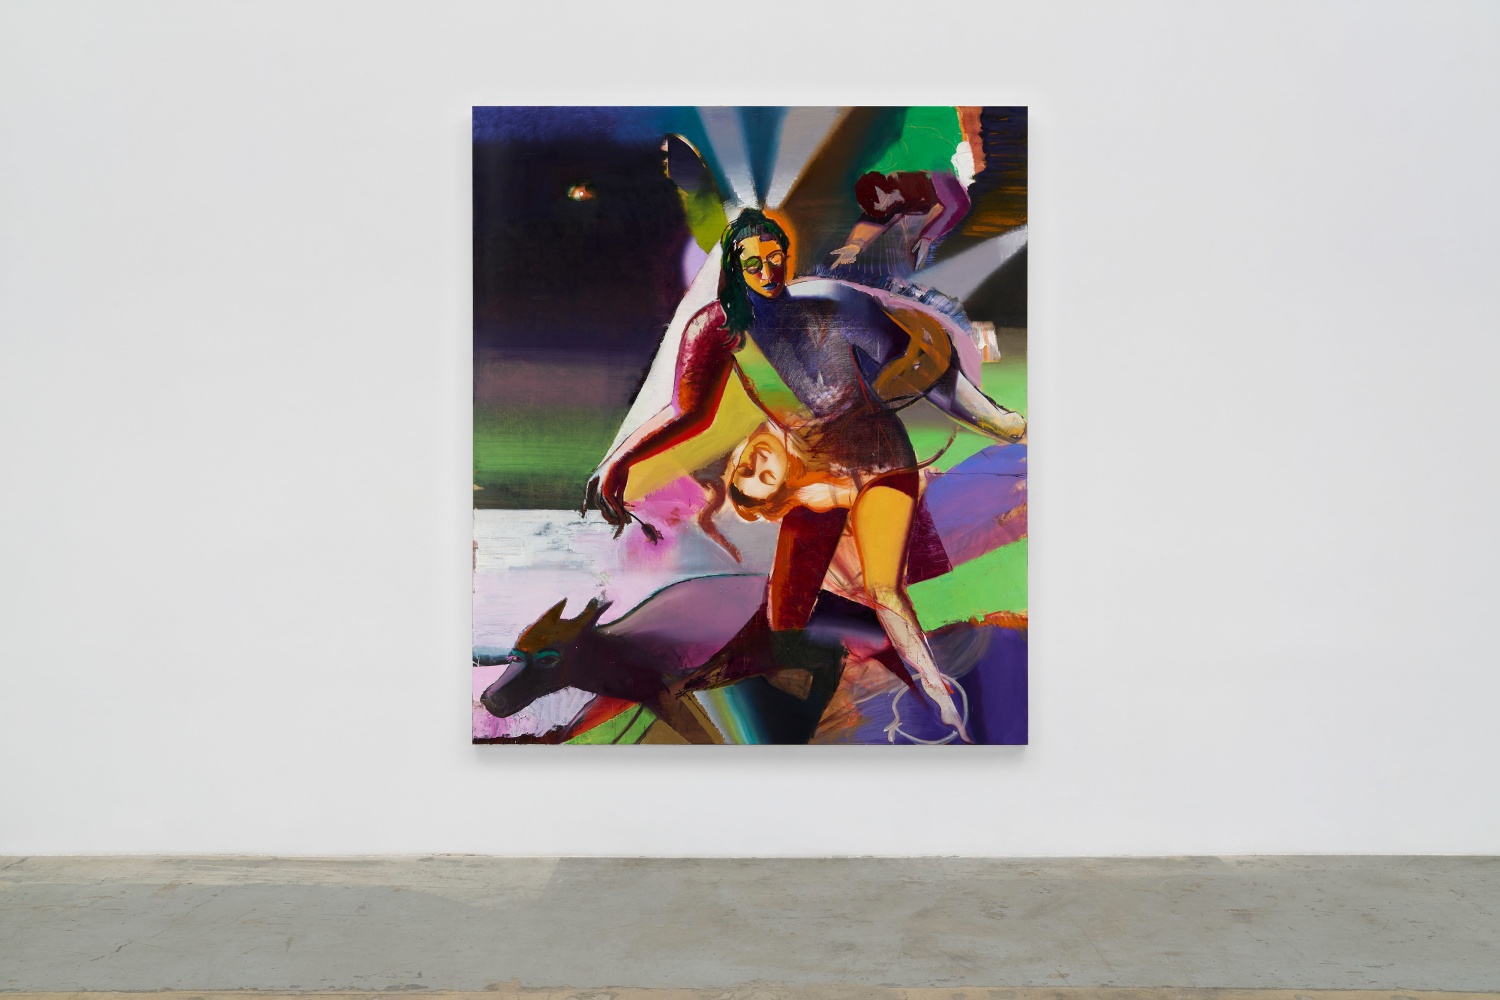 Katherina&amp;nbsp;Olschbaur
Angels and Avatars, 2021
oil on canvas
90.75 x 78.75 in
230.4 x 200 cm